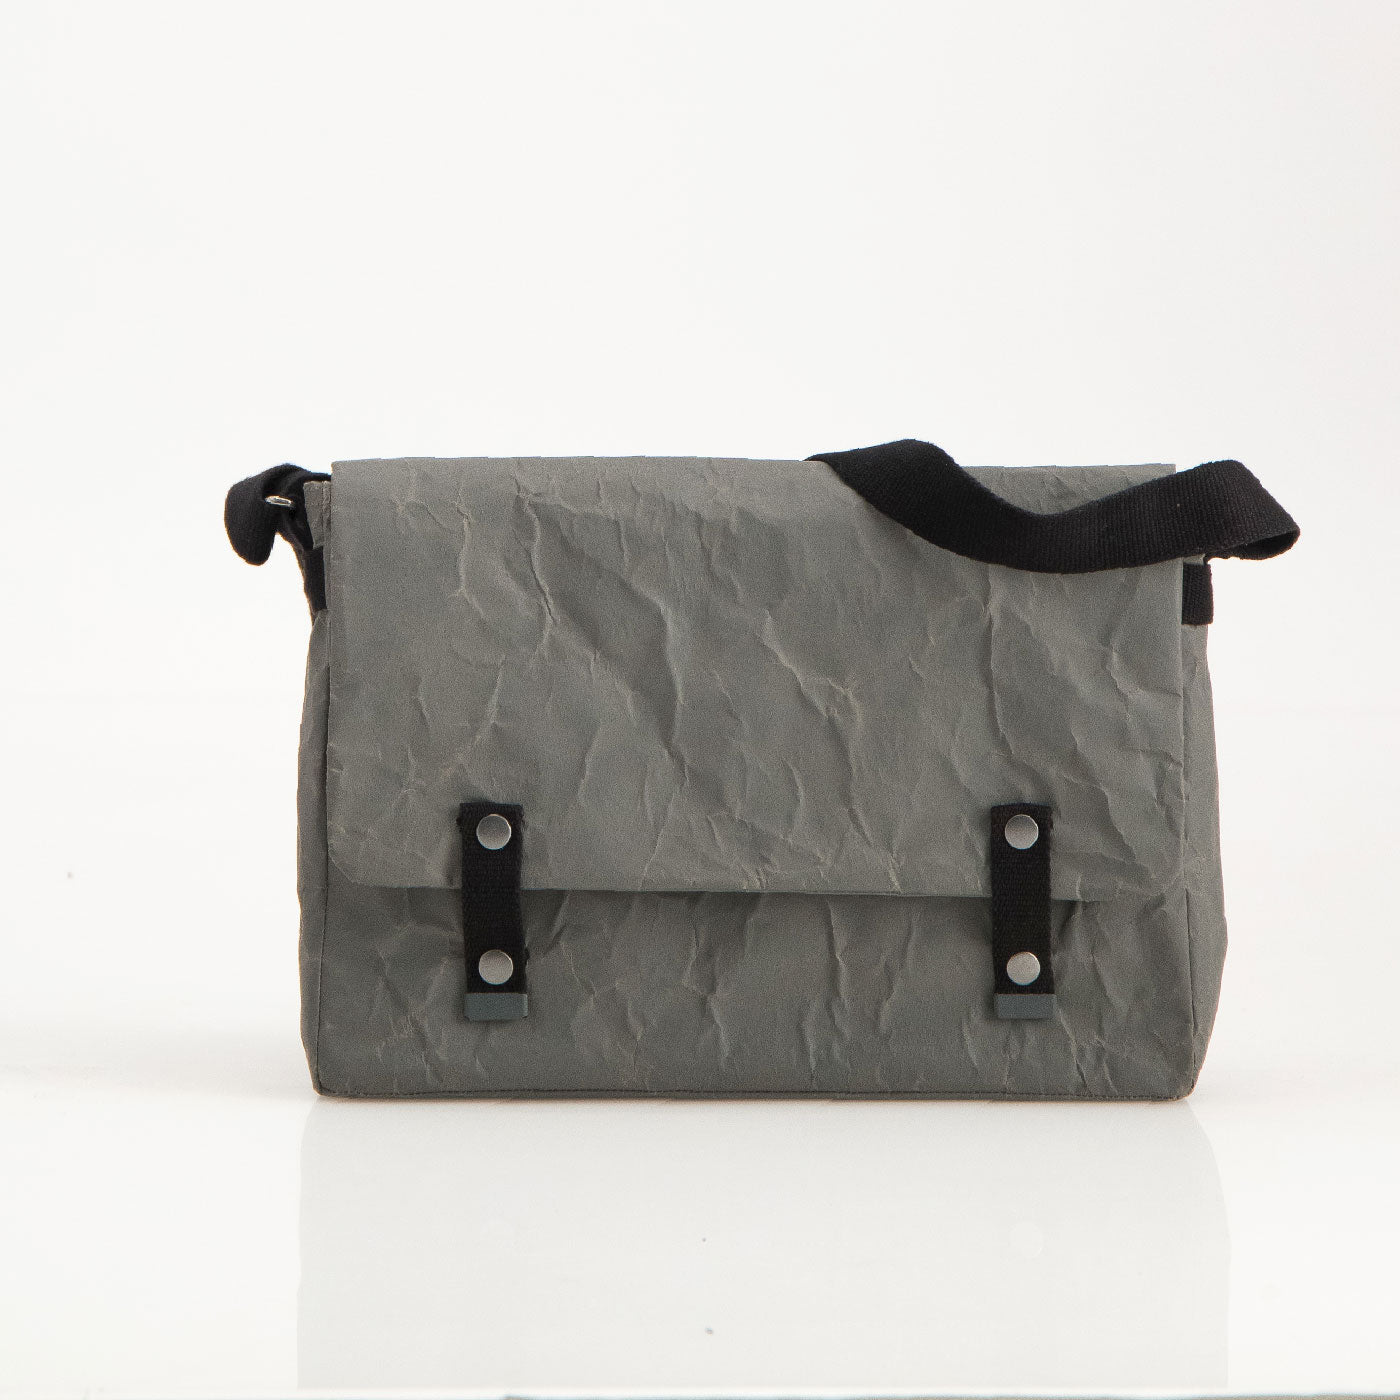 Laptoptasche - Messenger Bag | aus recycletem Zementpapier